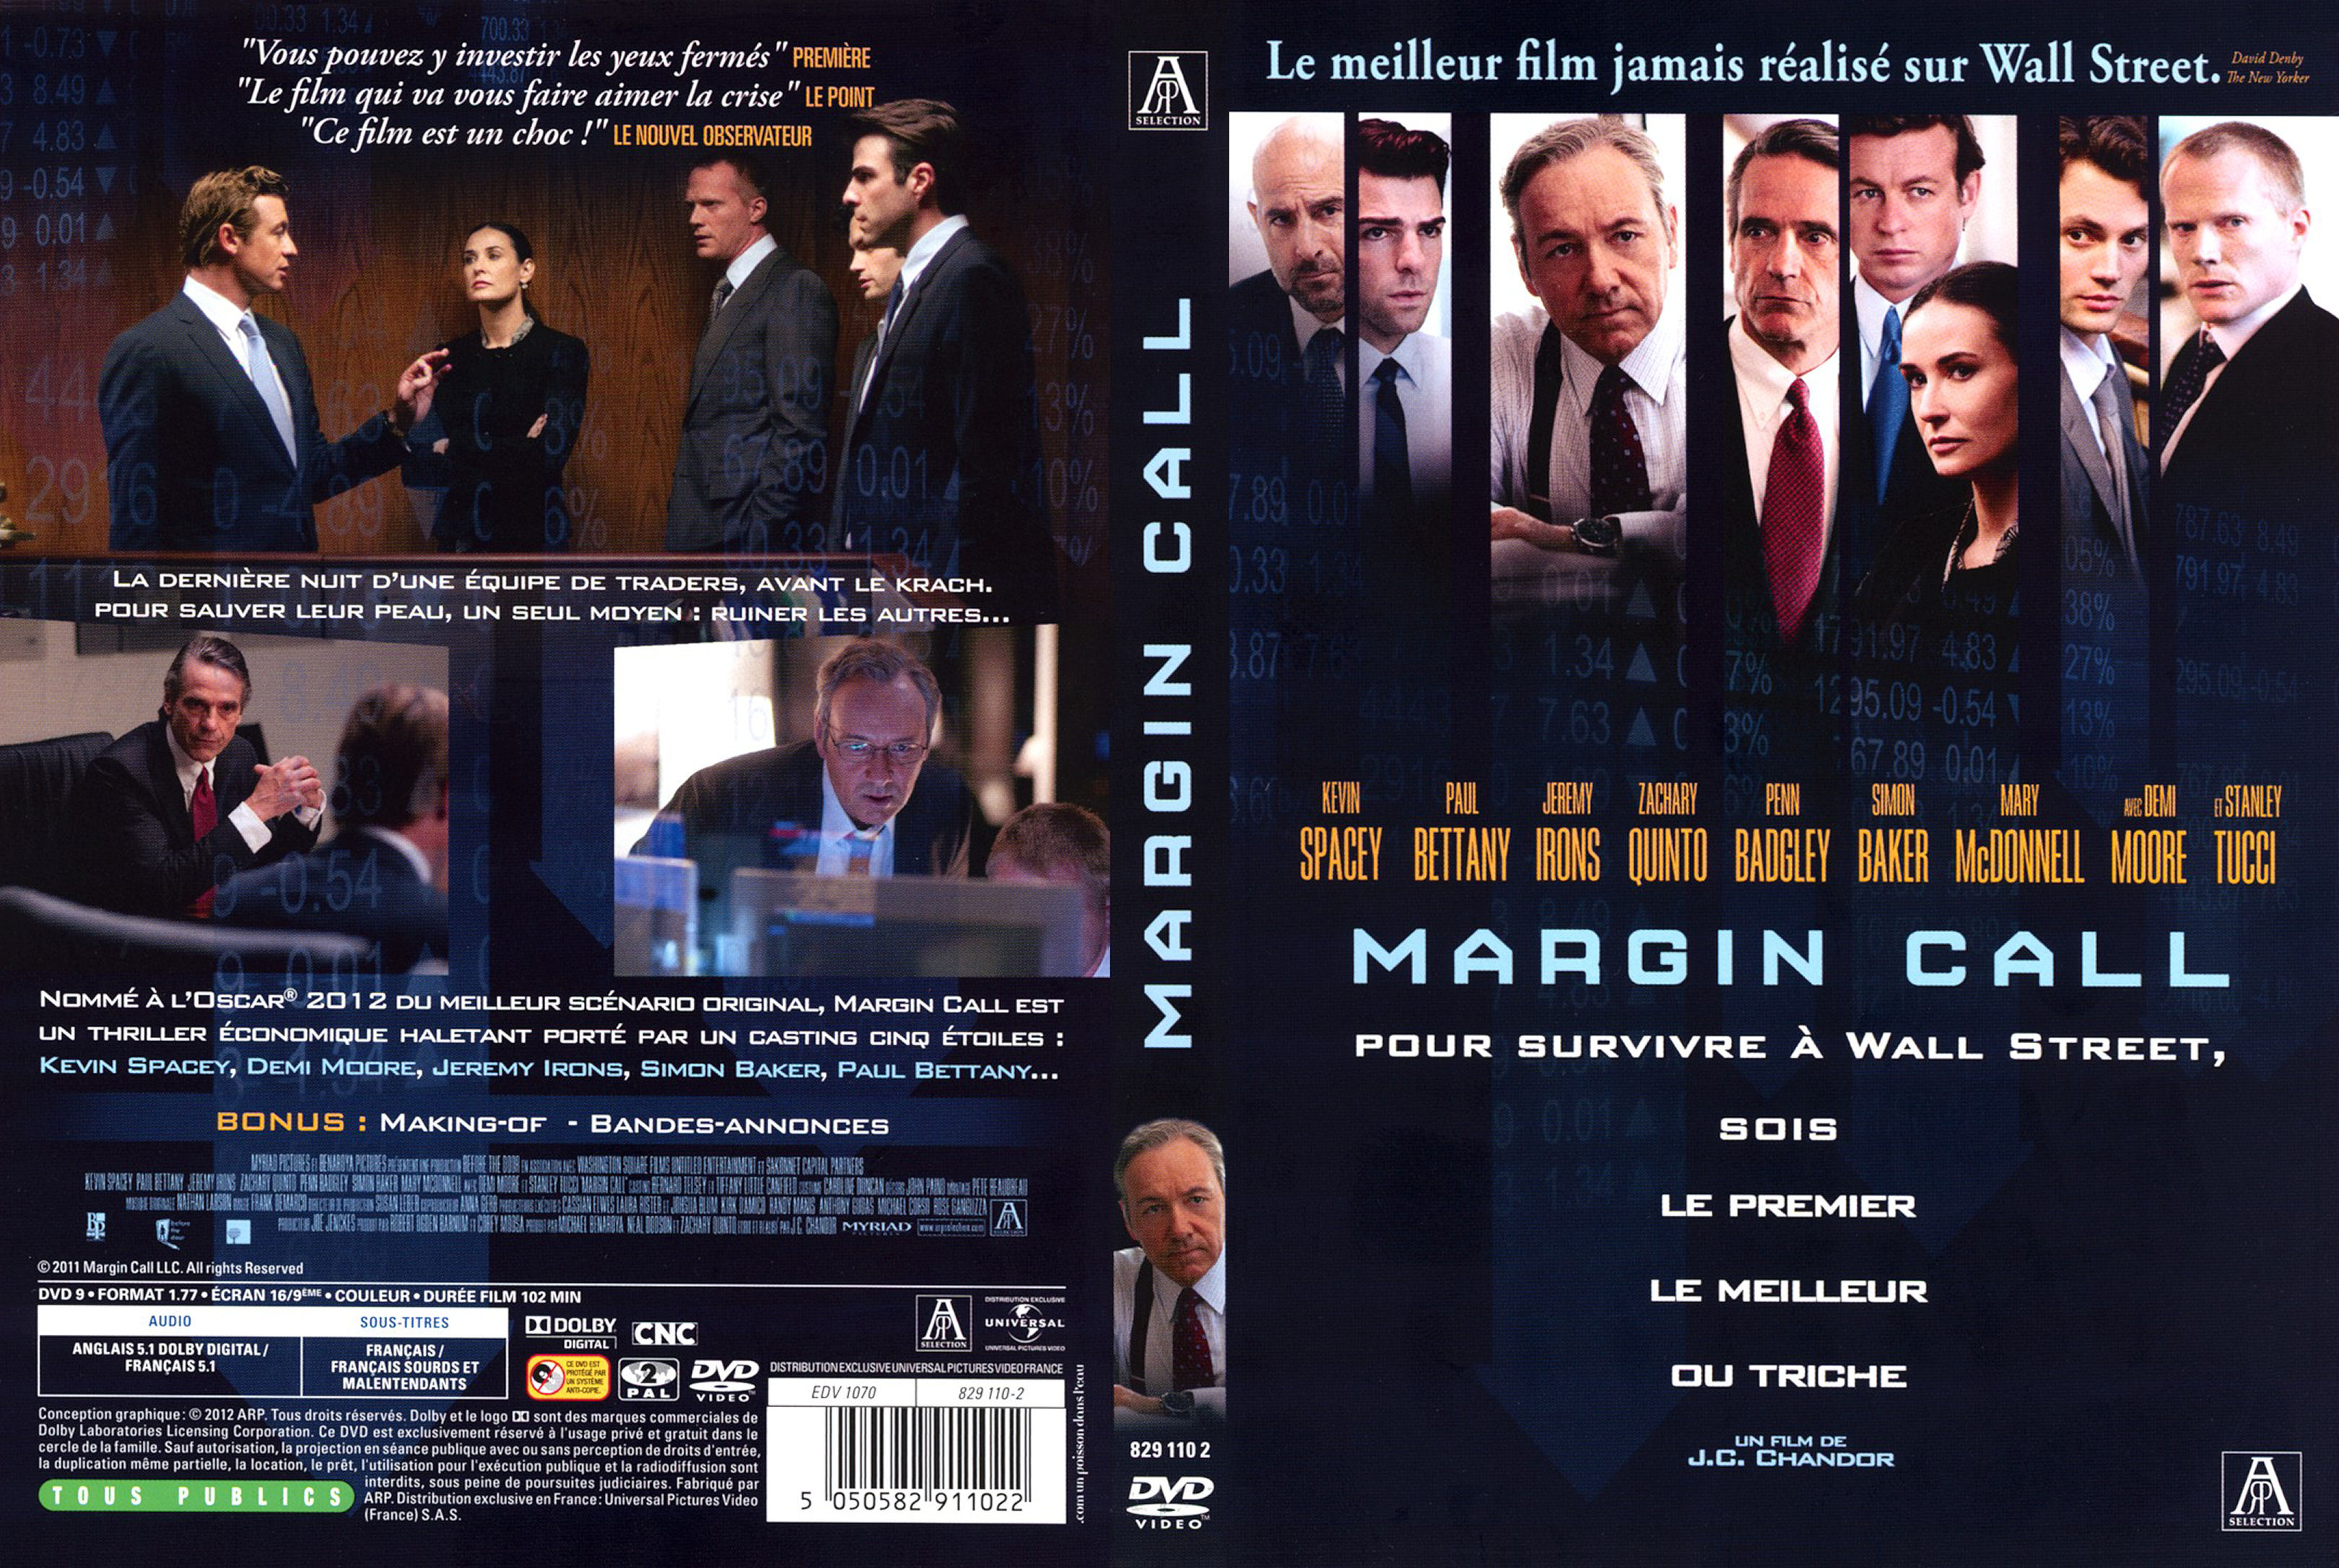 Jaquette DVD Margin Call